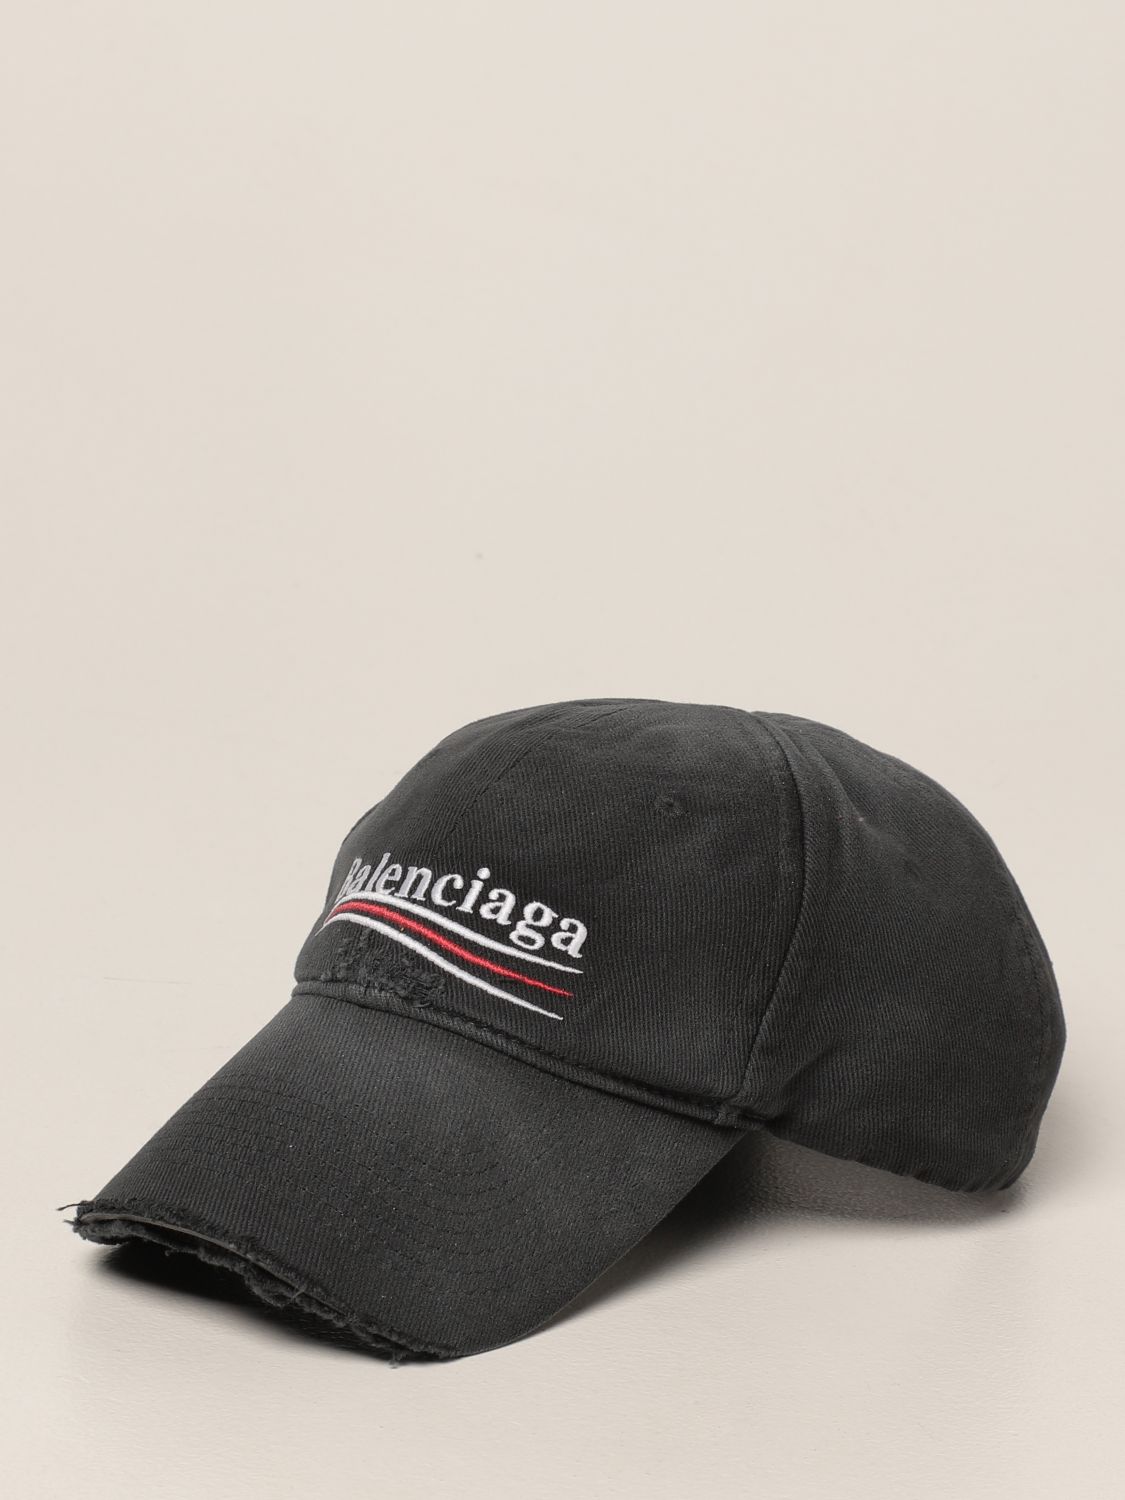 BALENCIAGA: cap with Political Destr logo - Black | hat 661884 310B2 online on